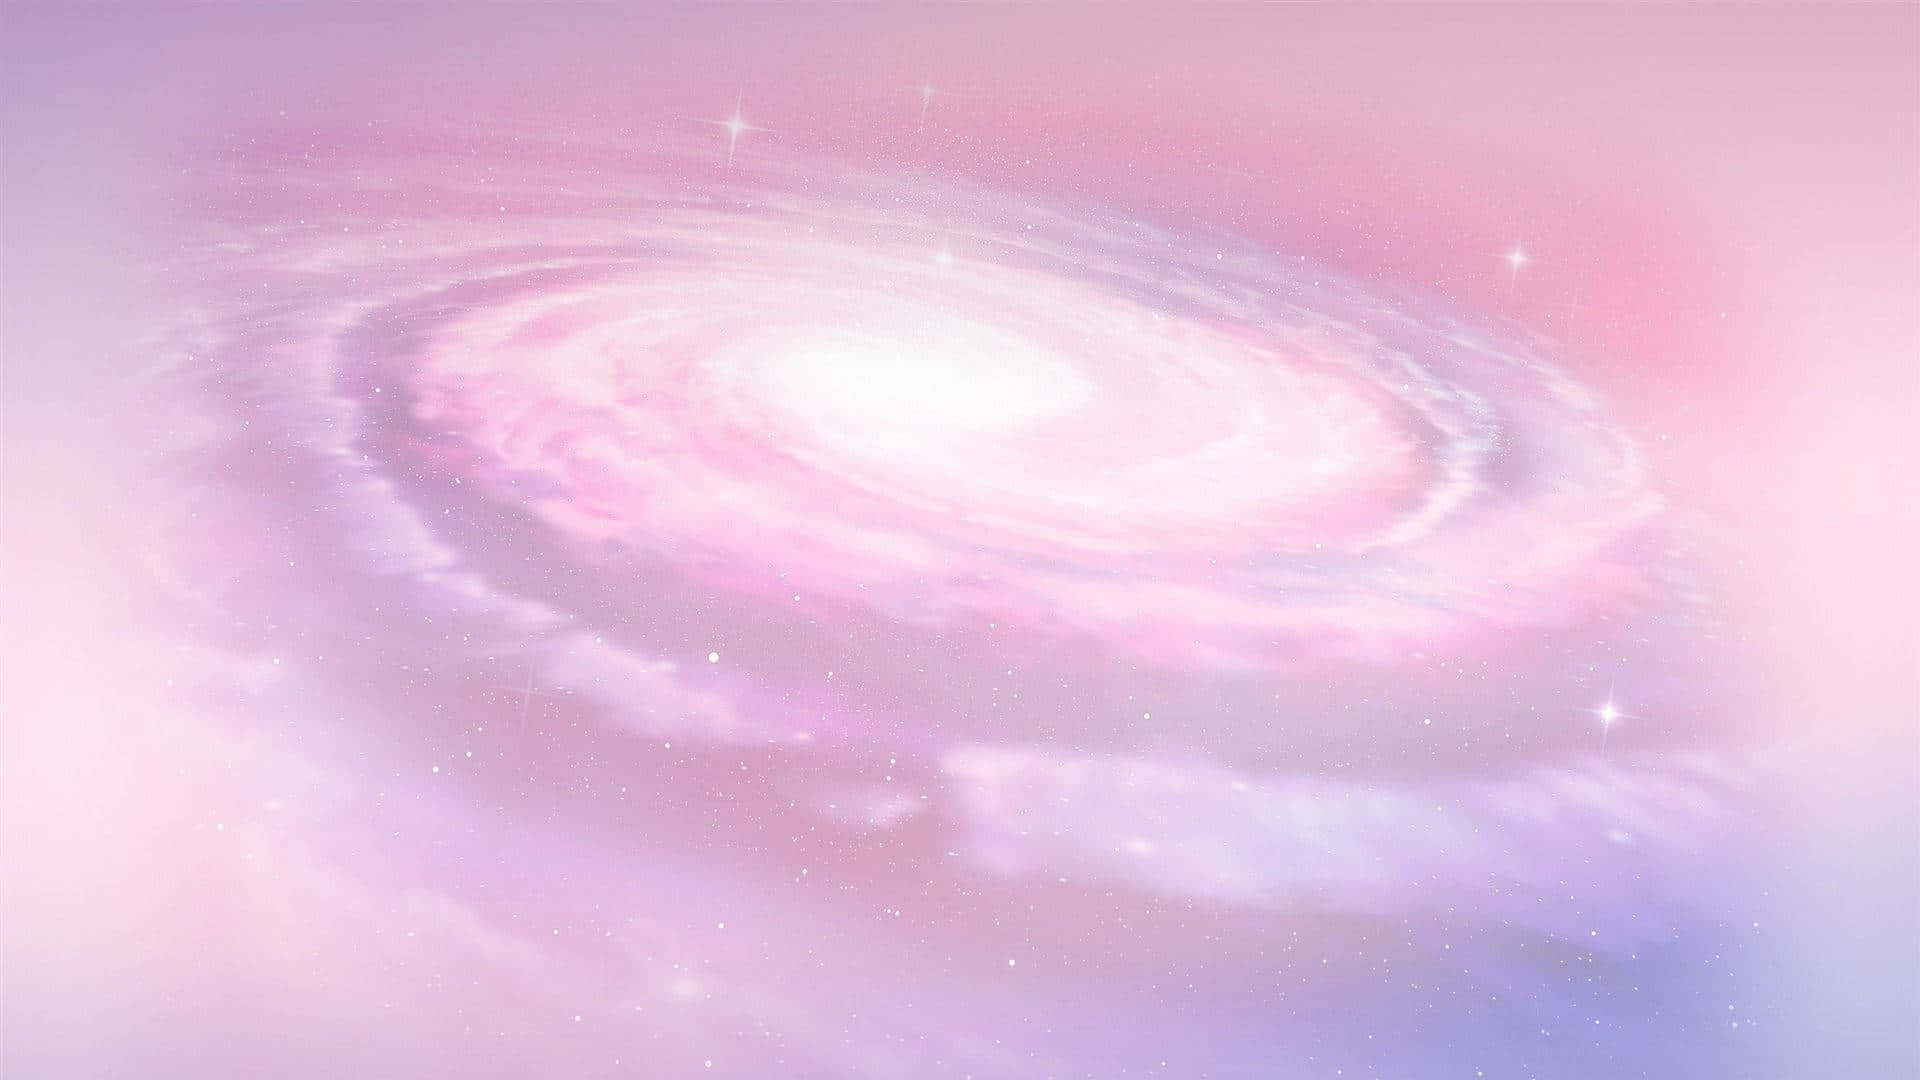 Explore the Starry Kawaii Galaxy Wallpaper